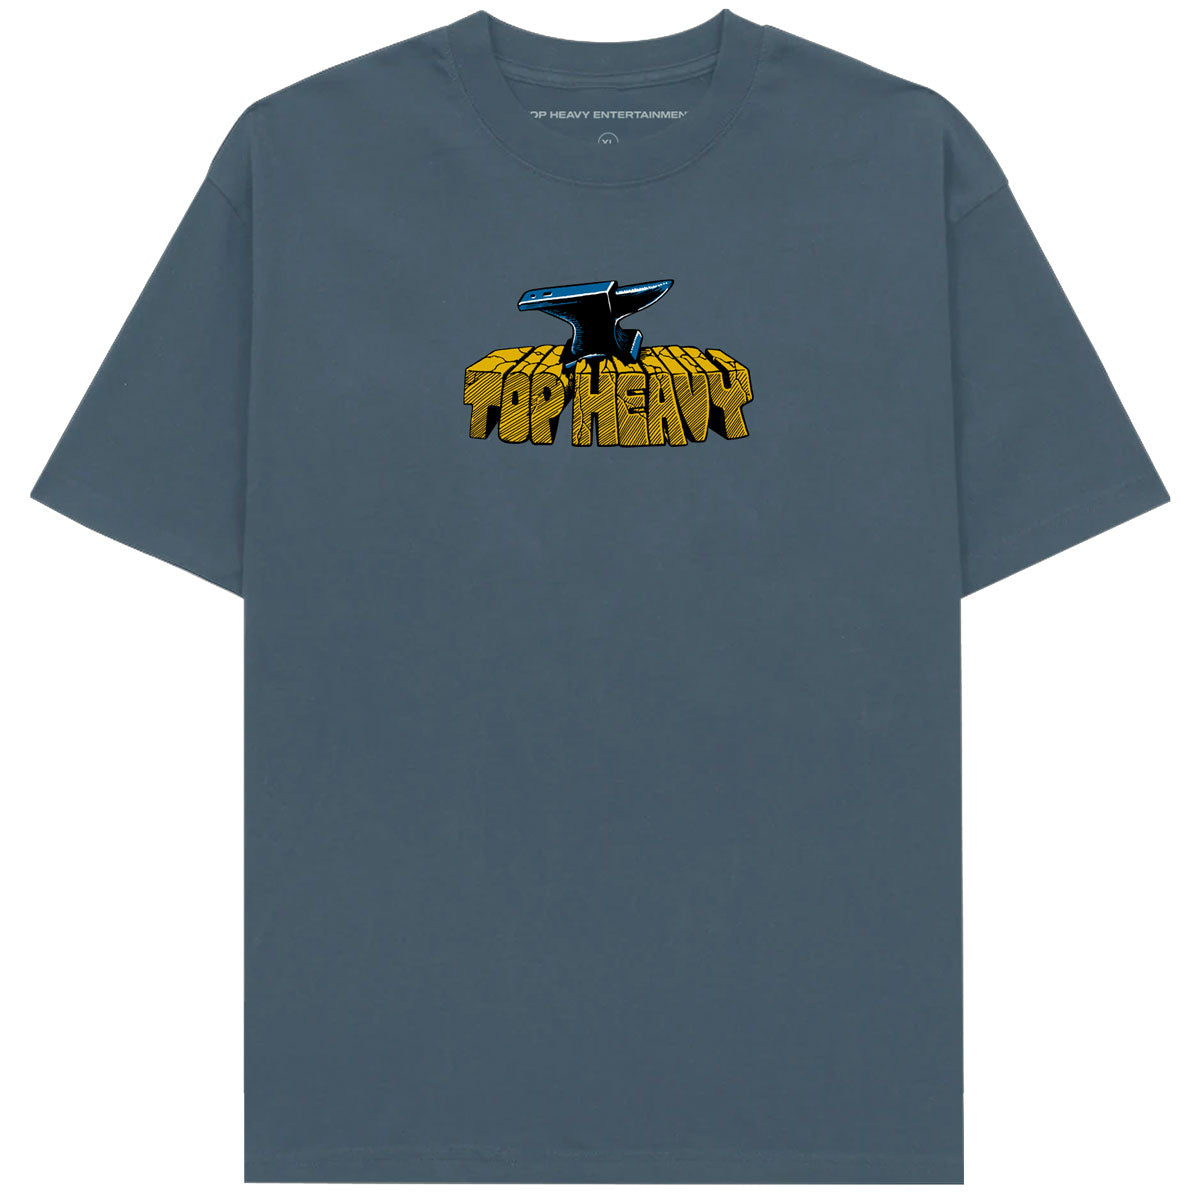 Top Heavy Anvil T-Shirt - Slate image 1